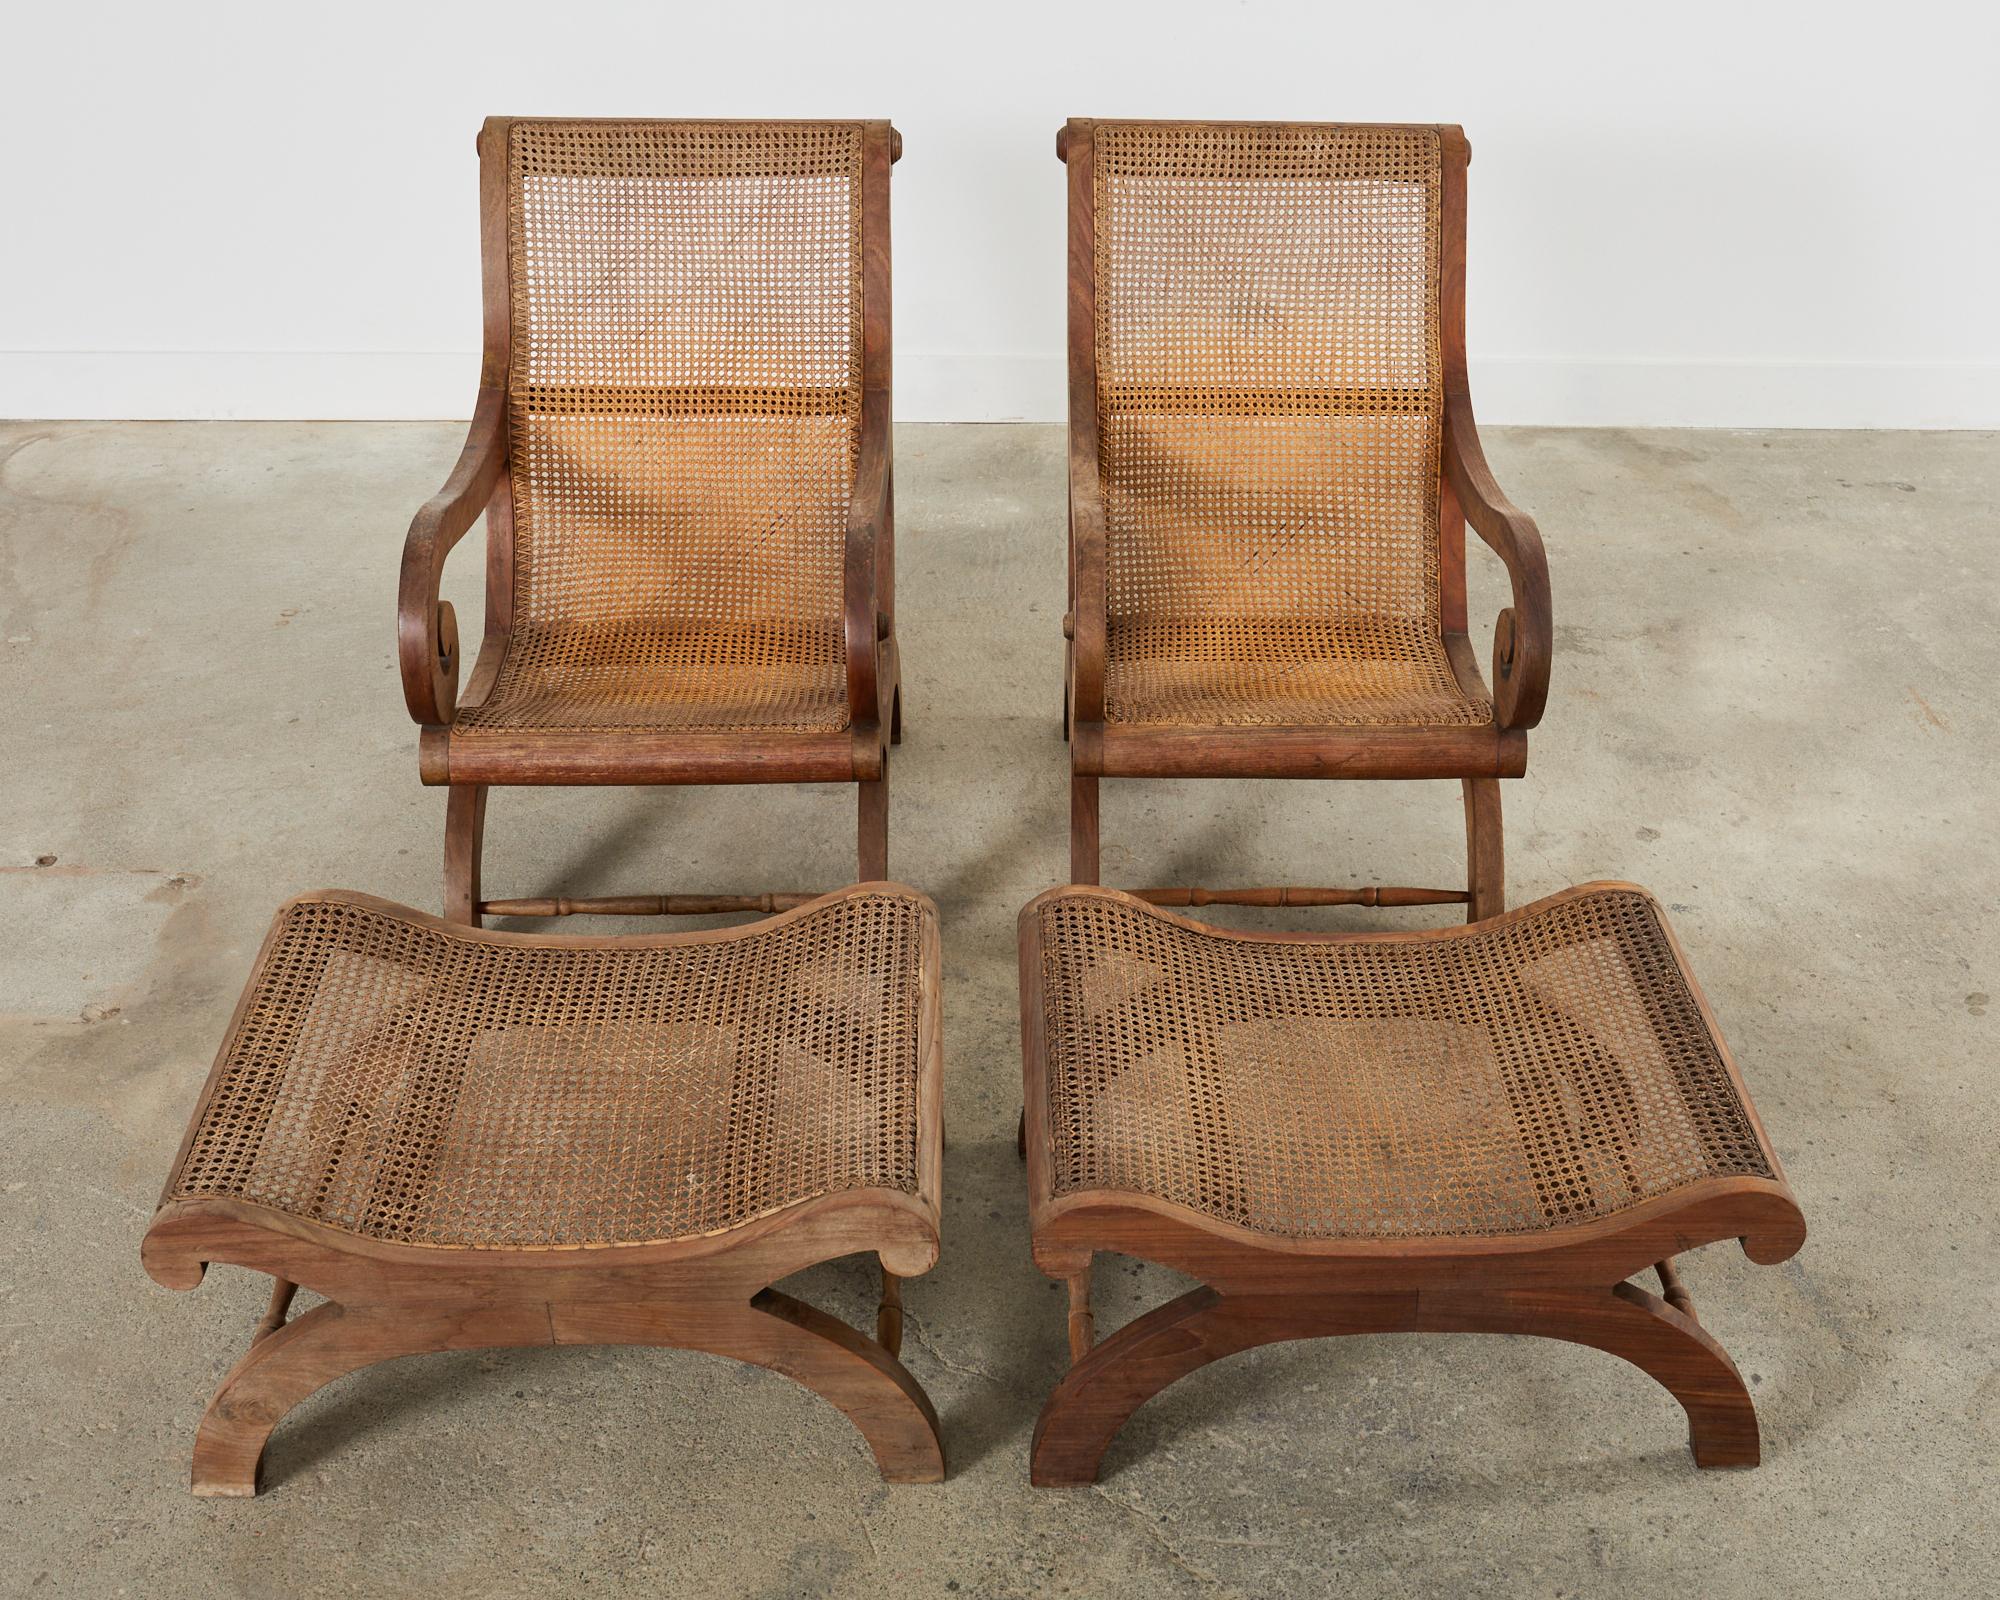 plantation chair and ottoman